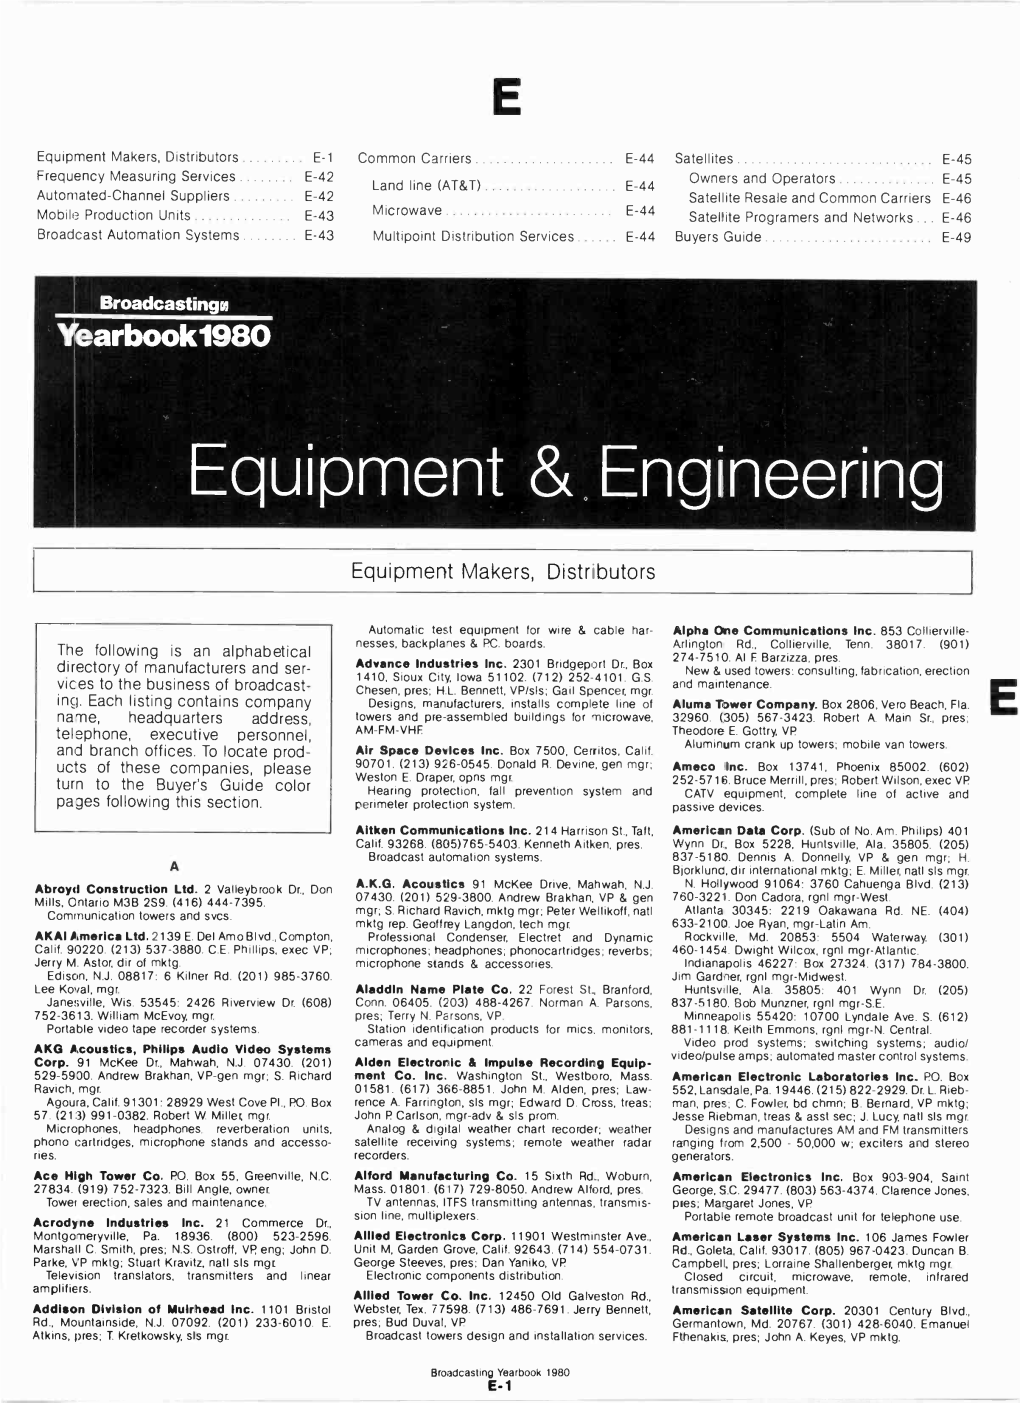 Equipment & Engineering